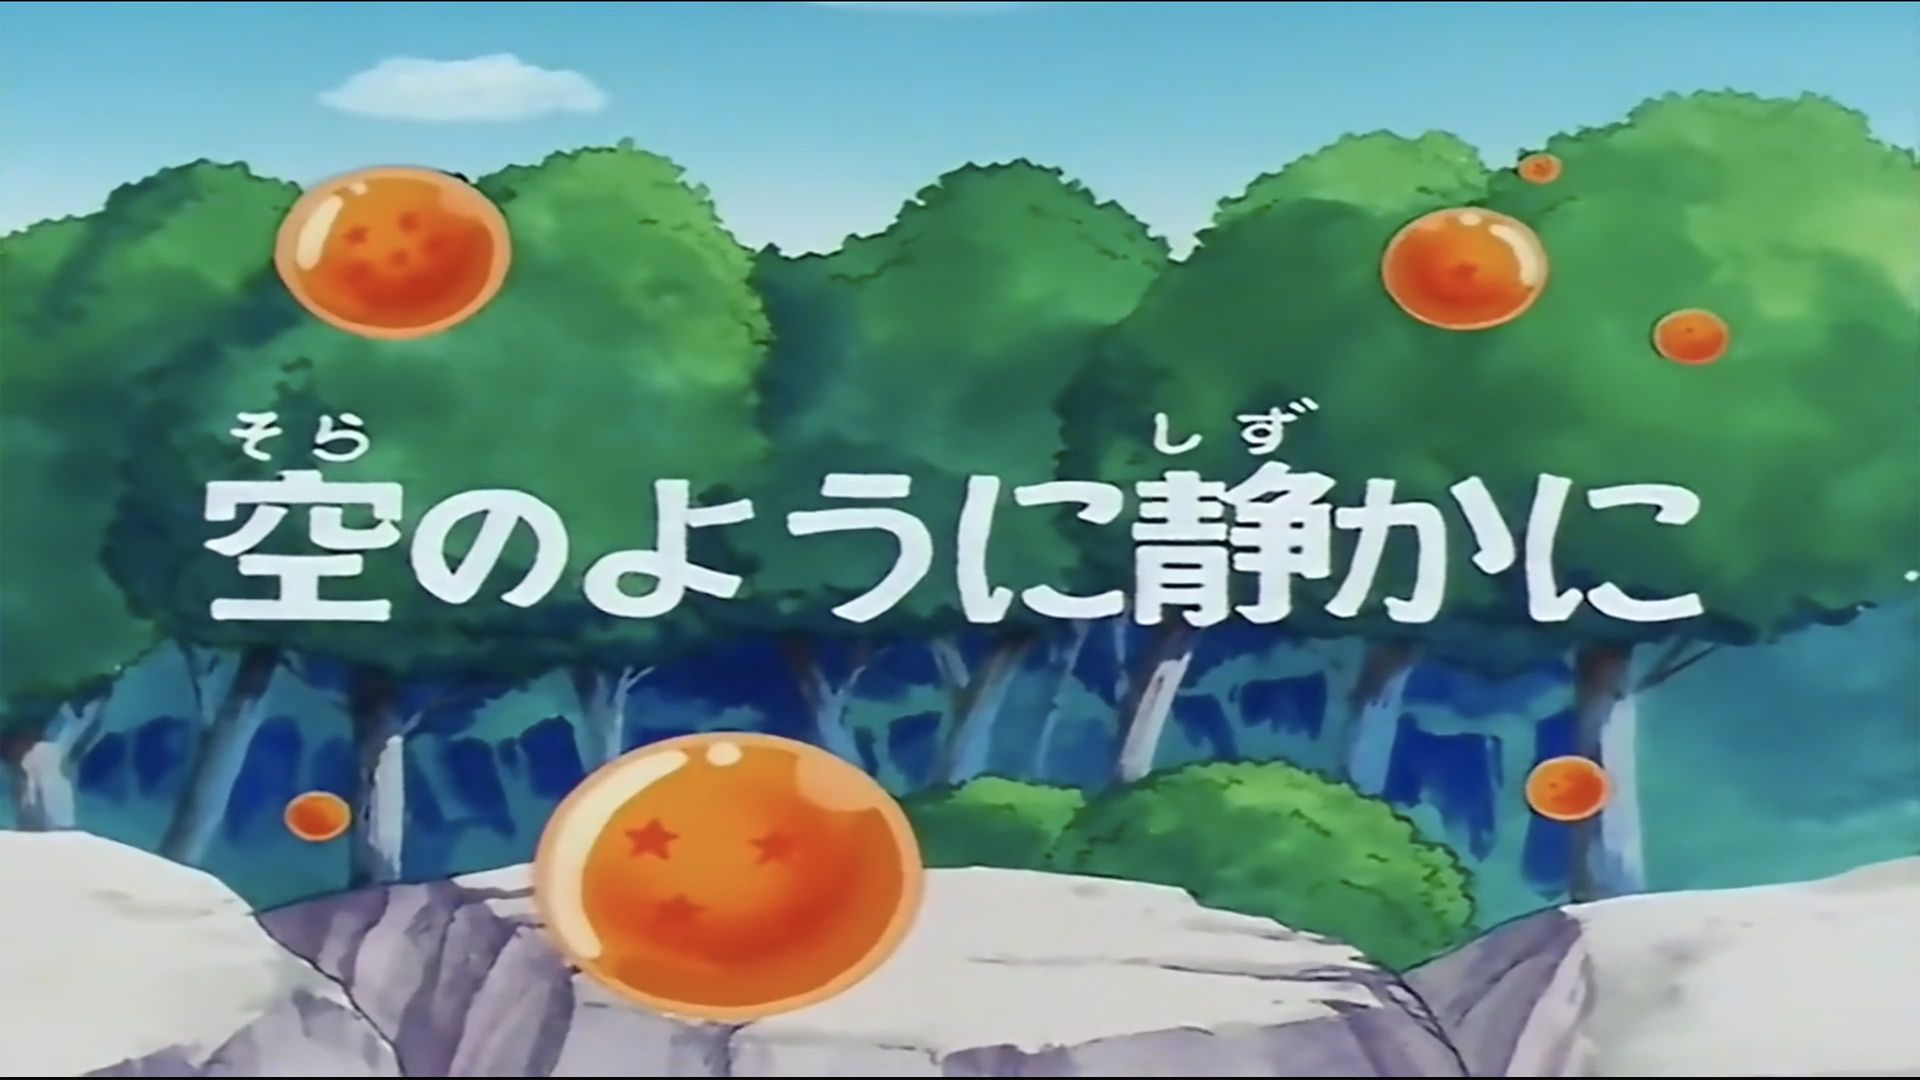 Dragon Ball background